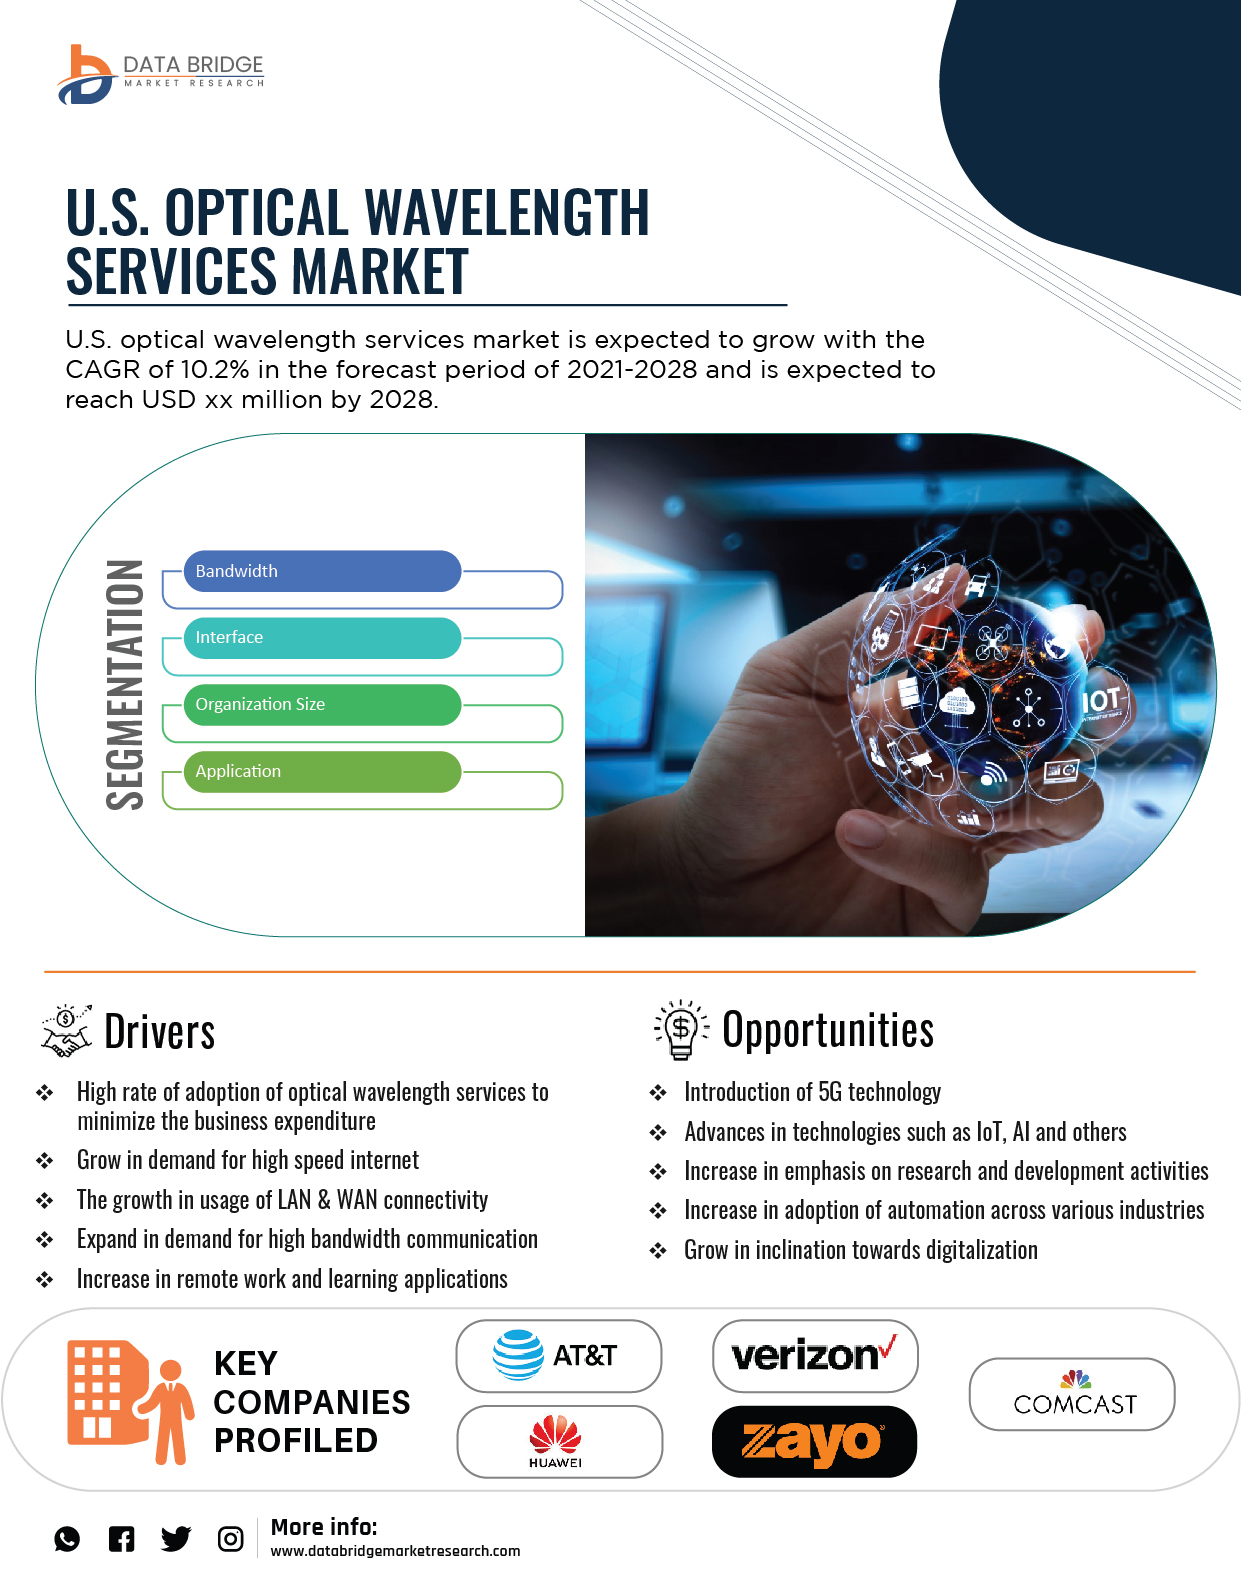 U.S. Optical Wavelength Services Market